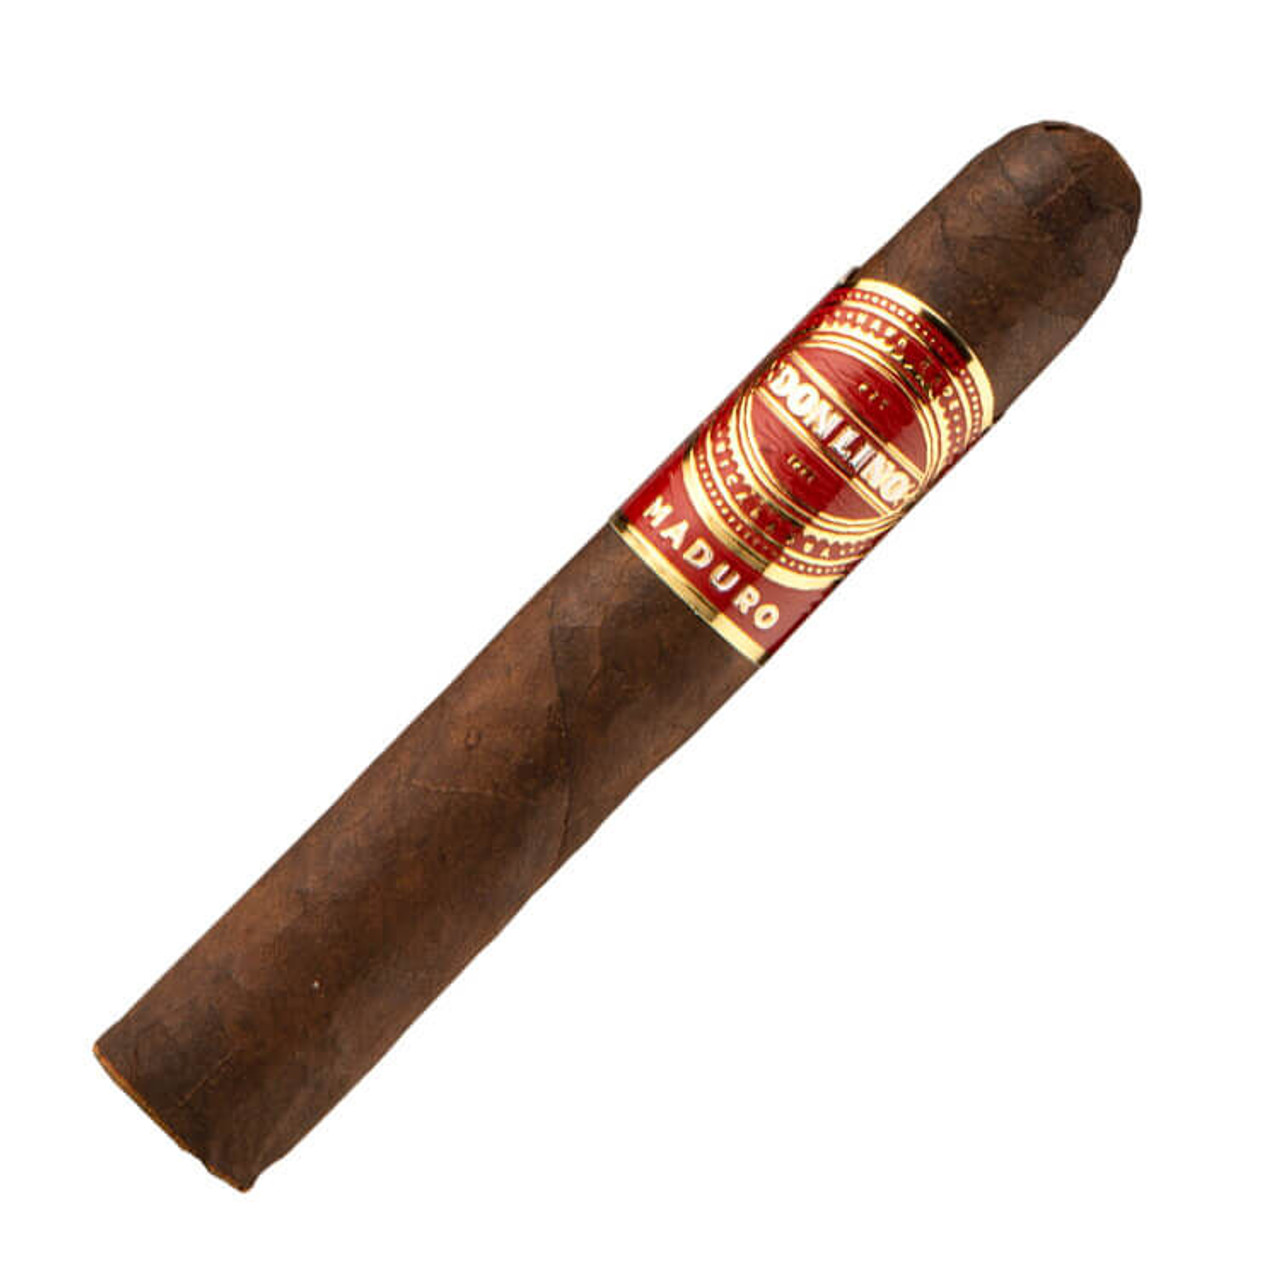 Don Lino Maduro Robusto Cigars - 5 x 50 Single